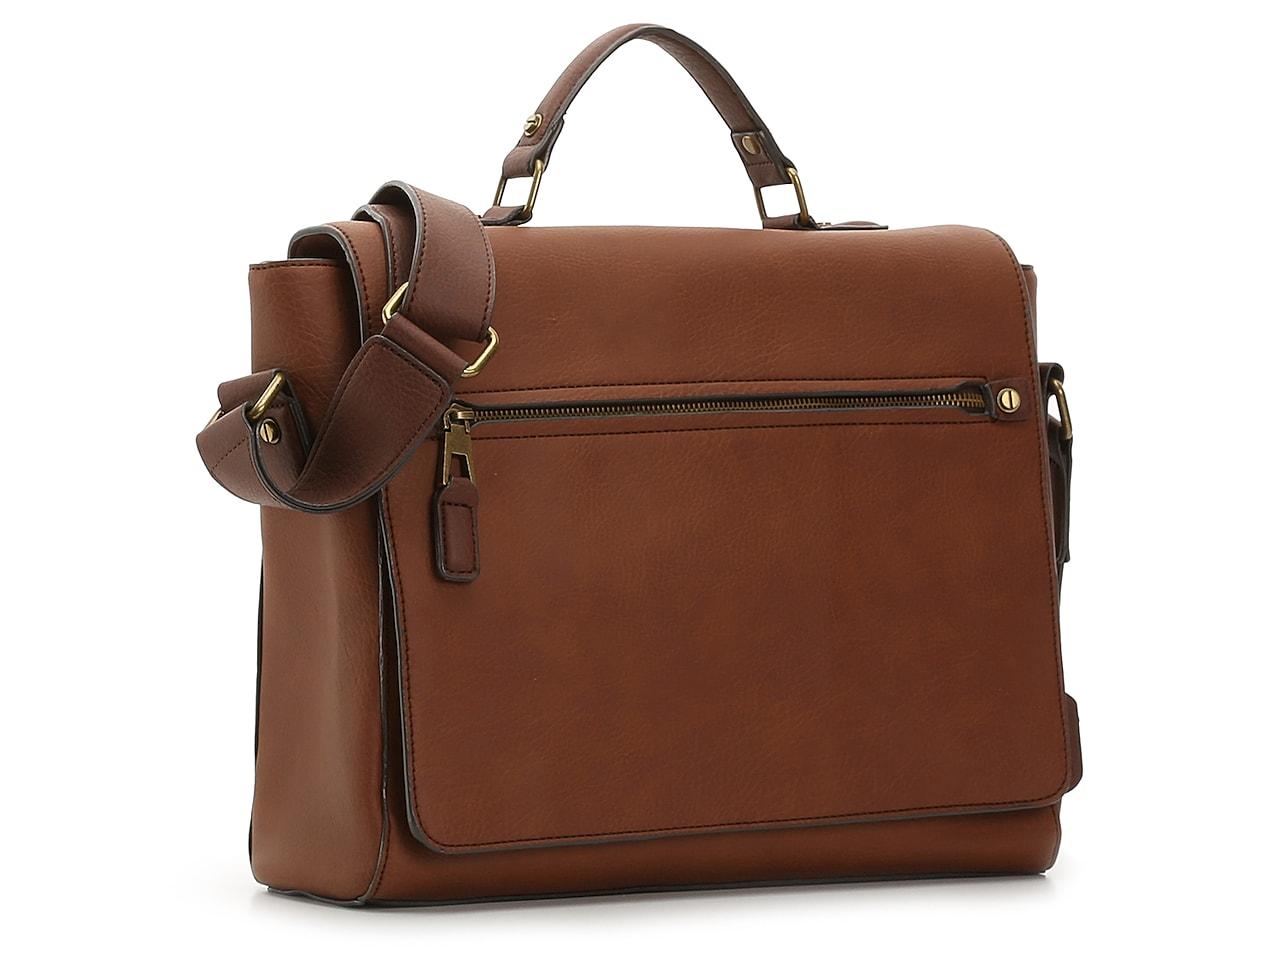 ALDO Saltillo Messenger Bag in Cognac (Brown) for Men - Lyst